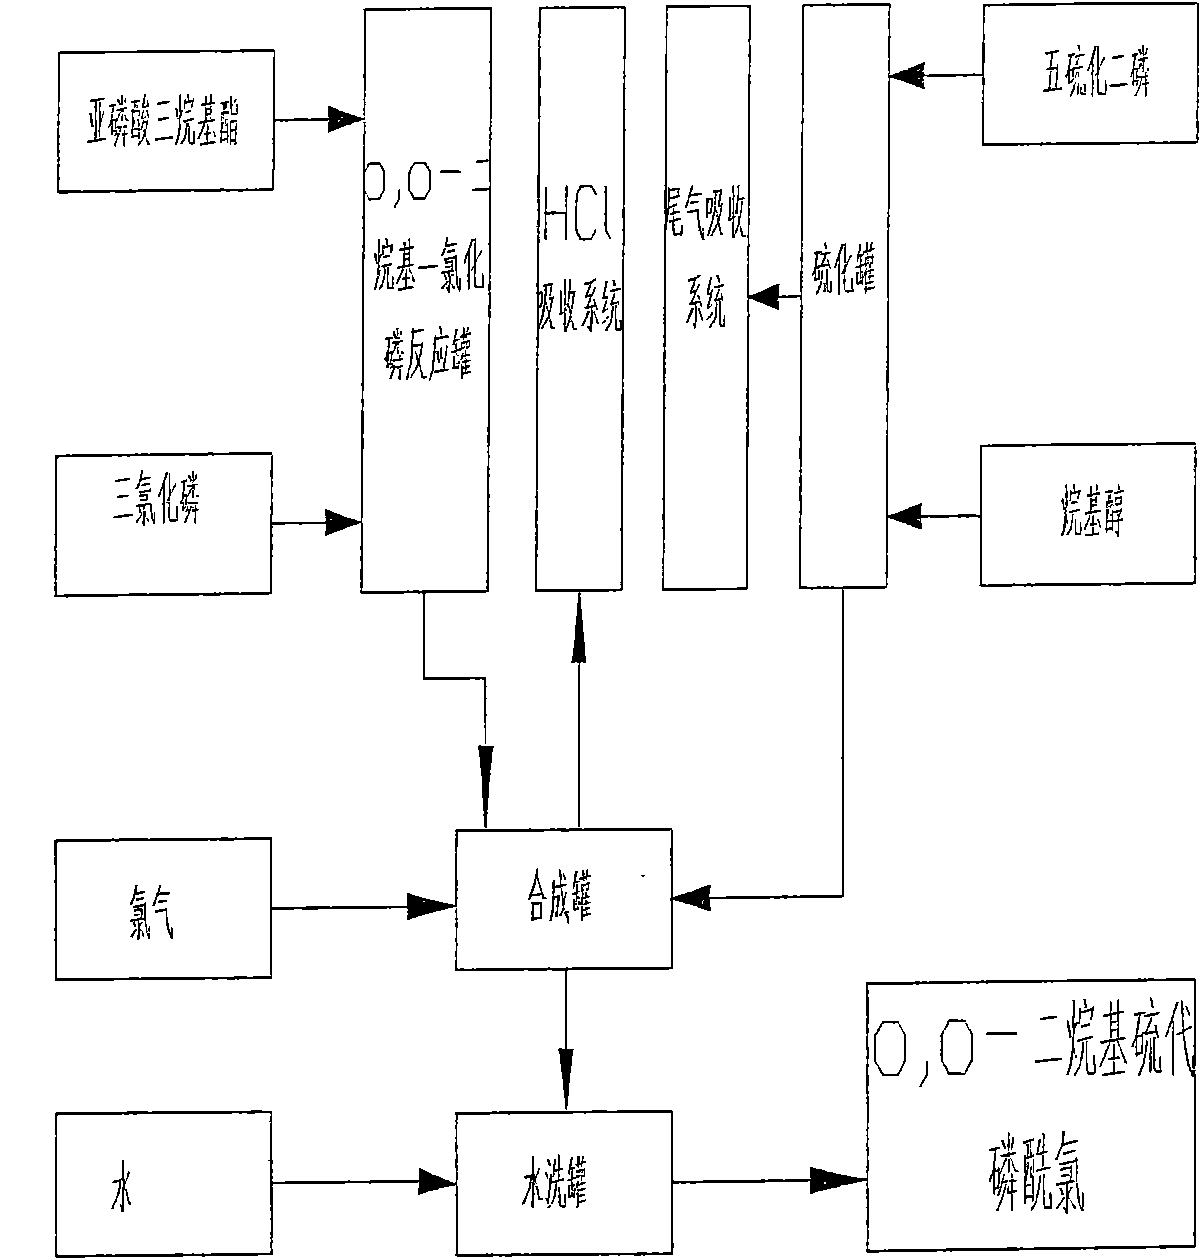 Production process of O, O-dialkyl thiophosphoryl chloride